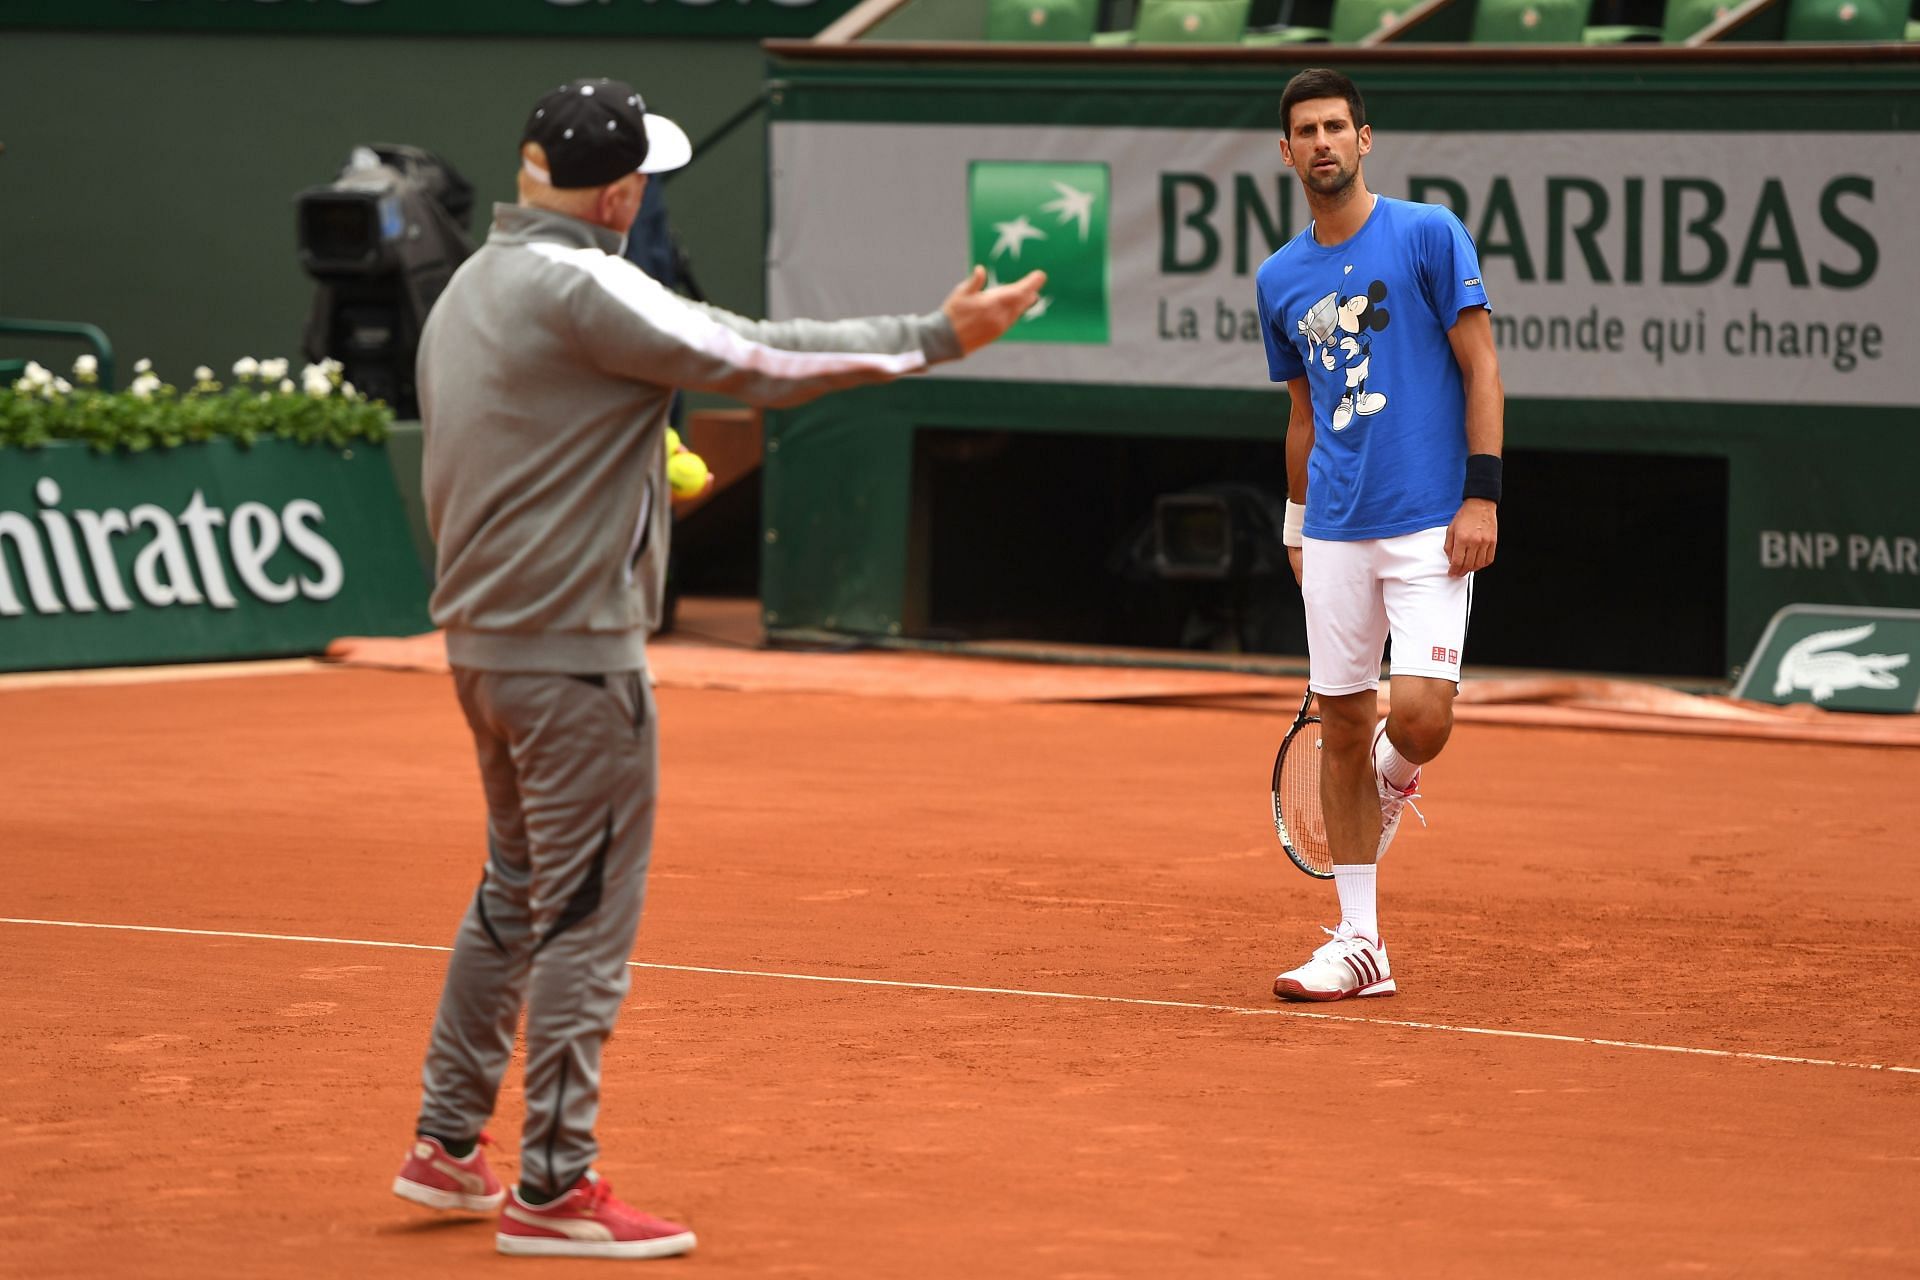 Boris Becker training Novak Djokovic at the 2016 French Open